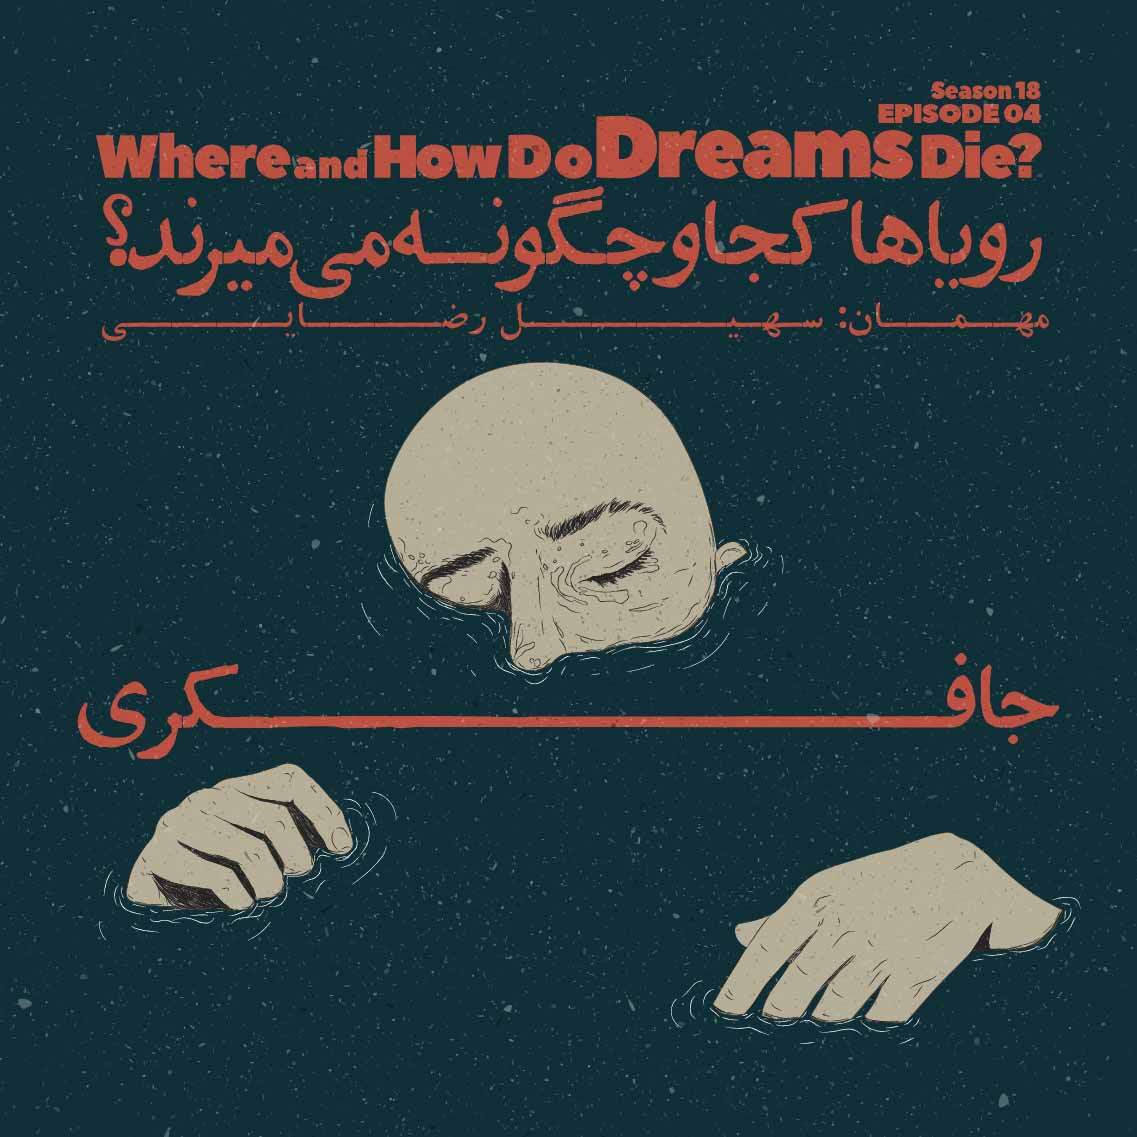 Episode 04 - Where and How Do Dreams Die? (رویاها کجا و چگونه می‌میرند؟)